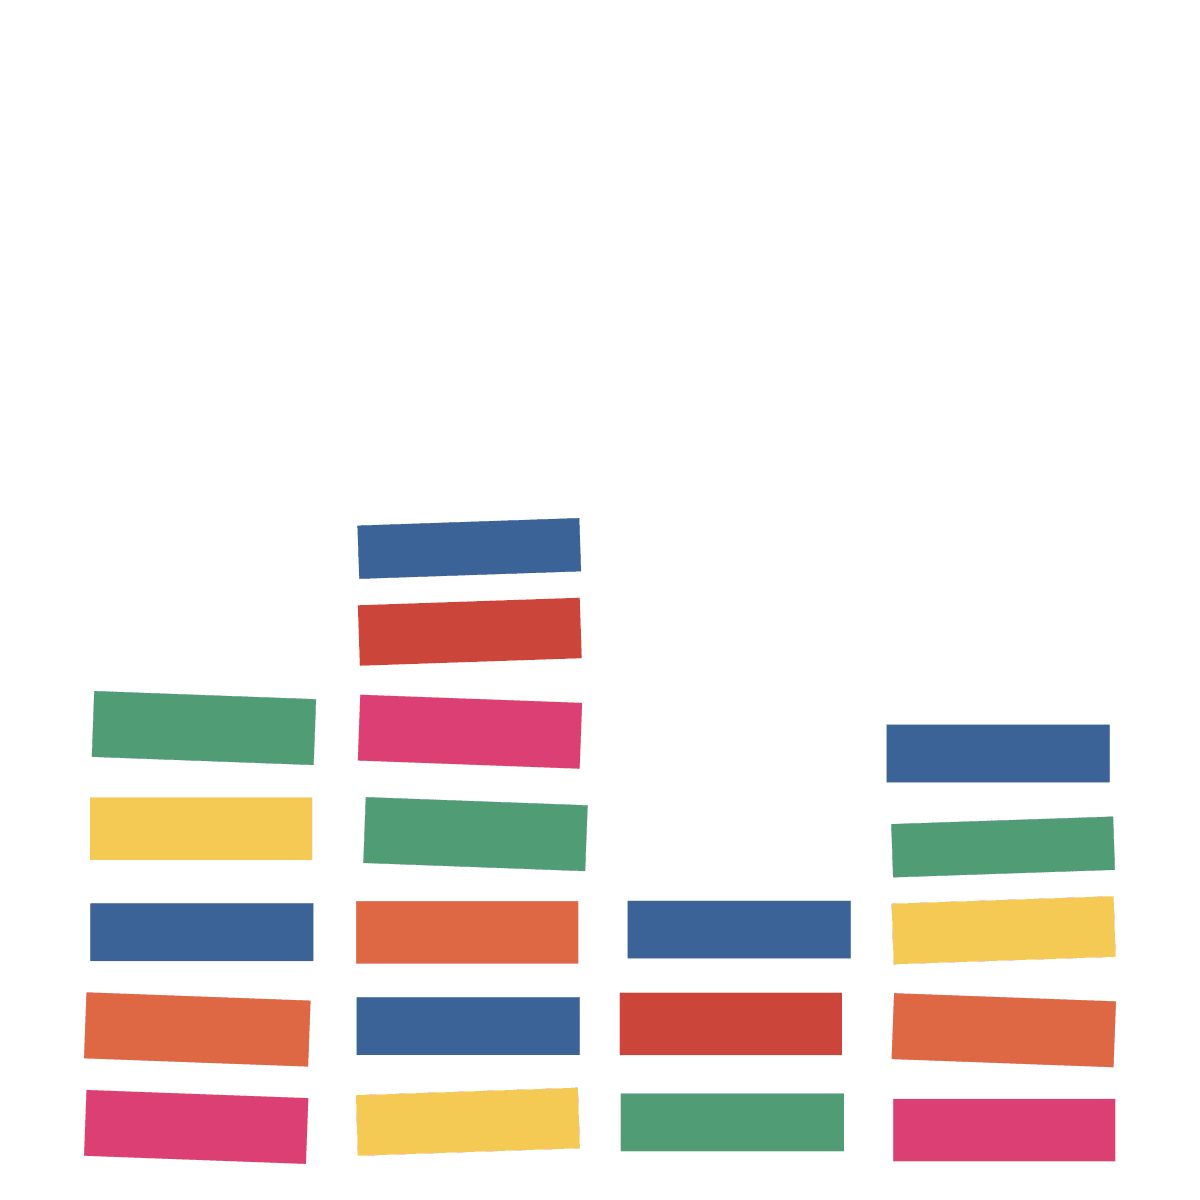 Colourful branded blocks for La Slague's 2018-2019 season